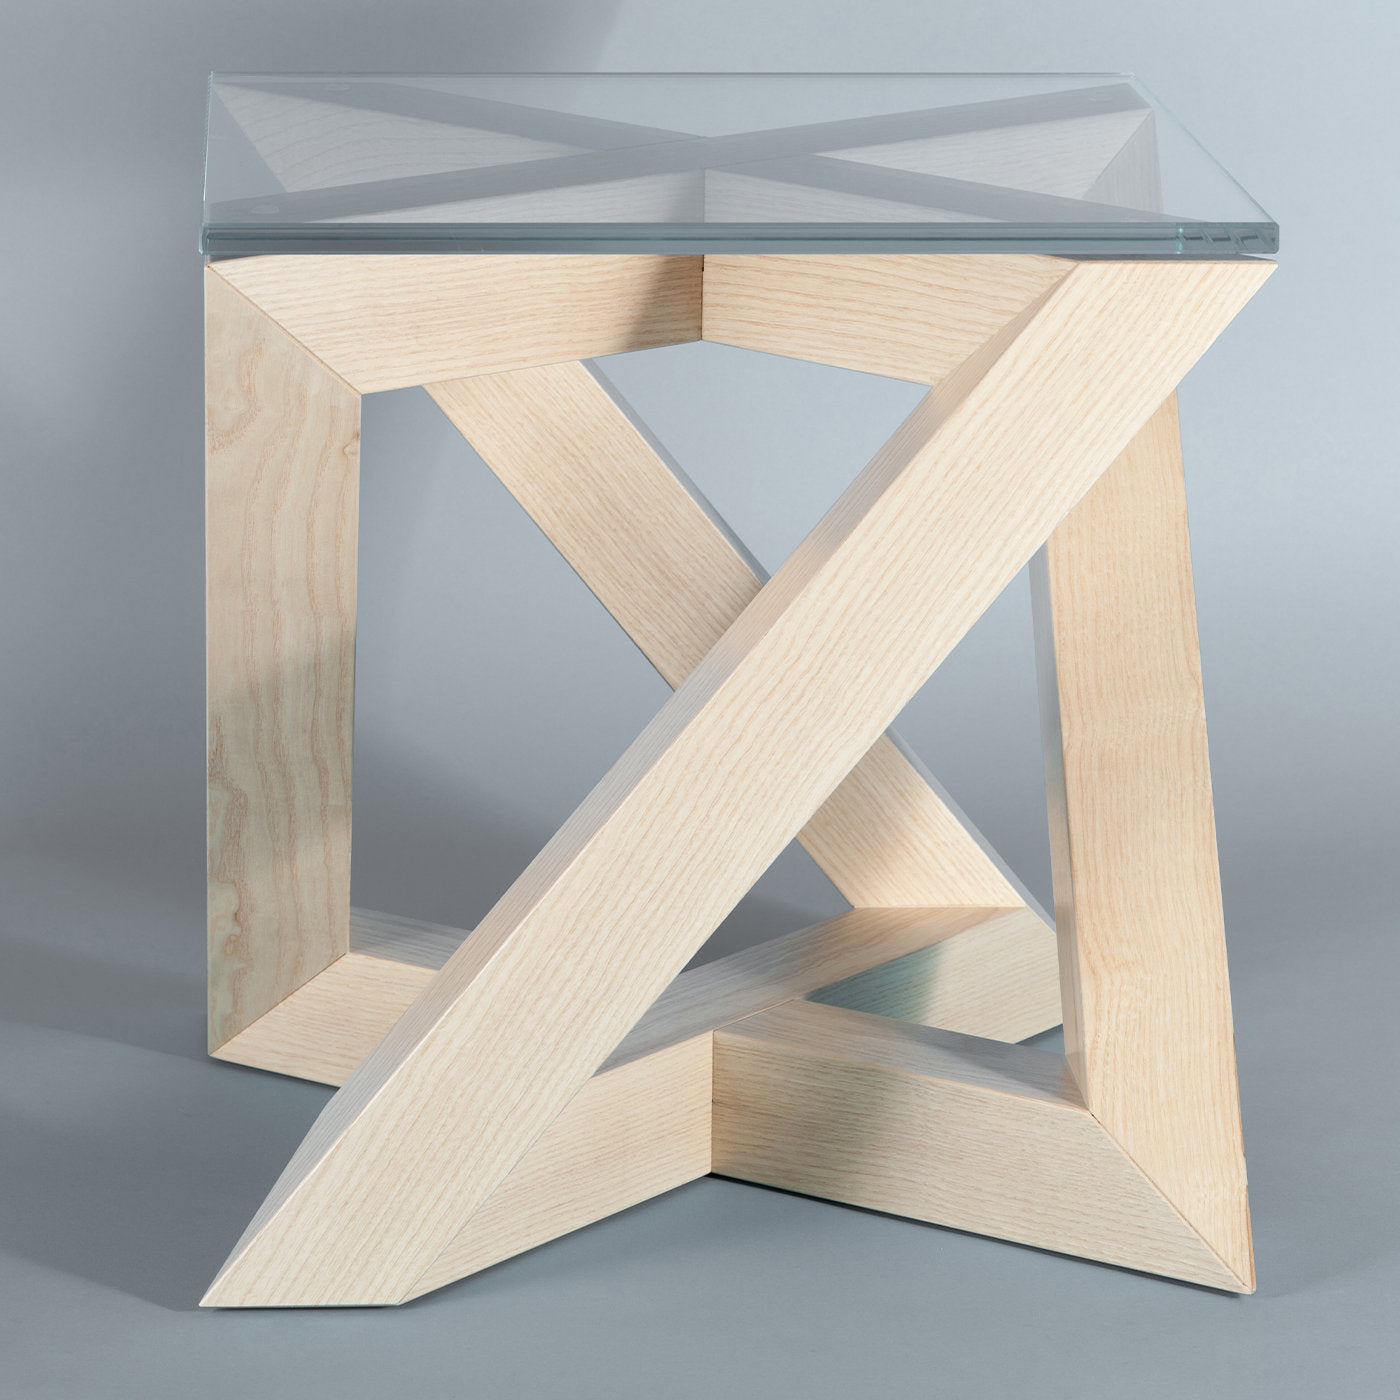 RK Side Table #3 by Antonio Saporito - Alternative view 1